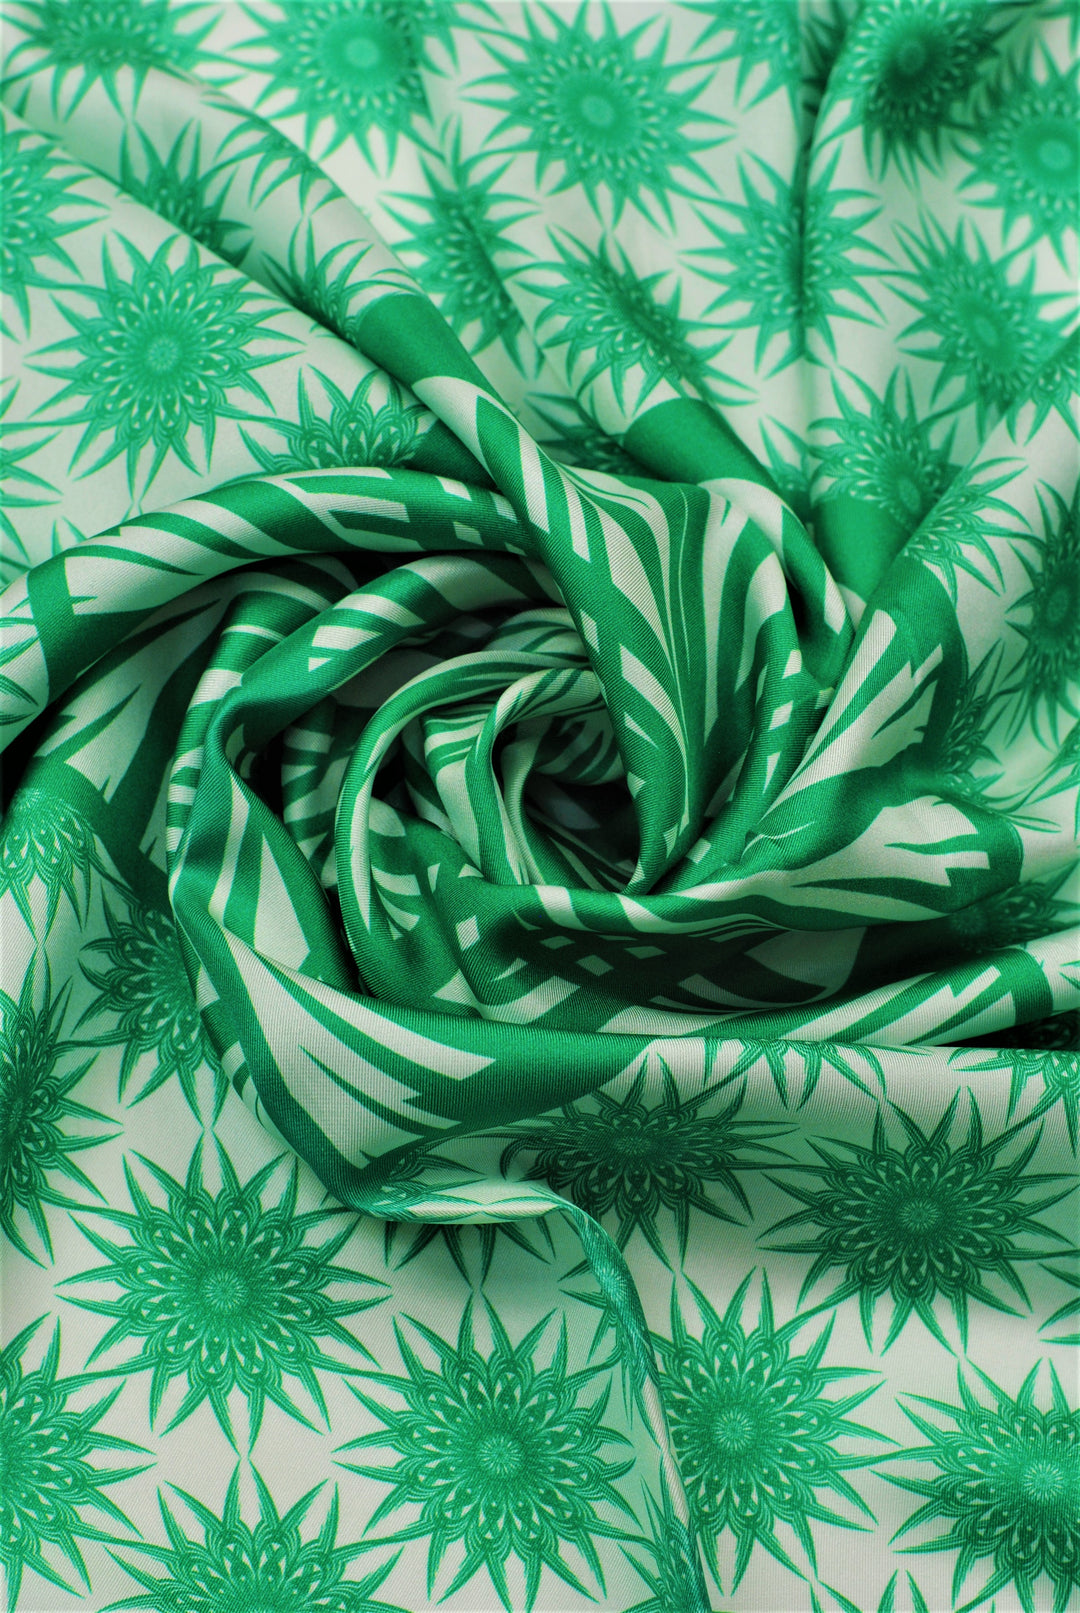 WISDOM Mandala Art Pure Silk Square Scarf in Green White by Alesia Chaika